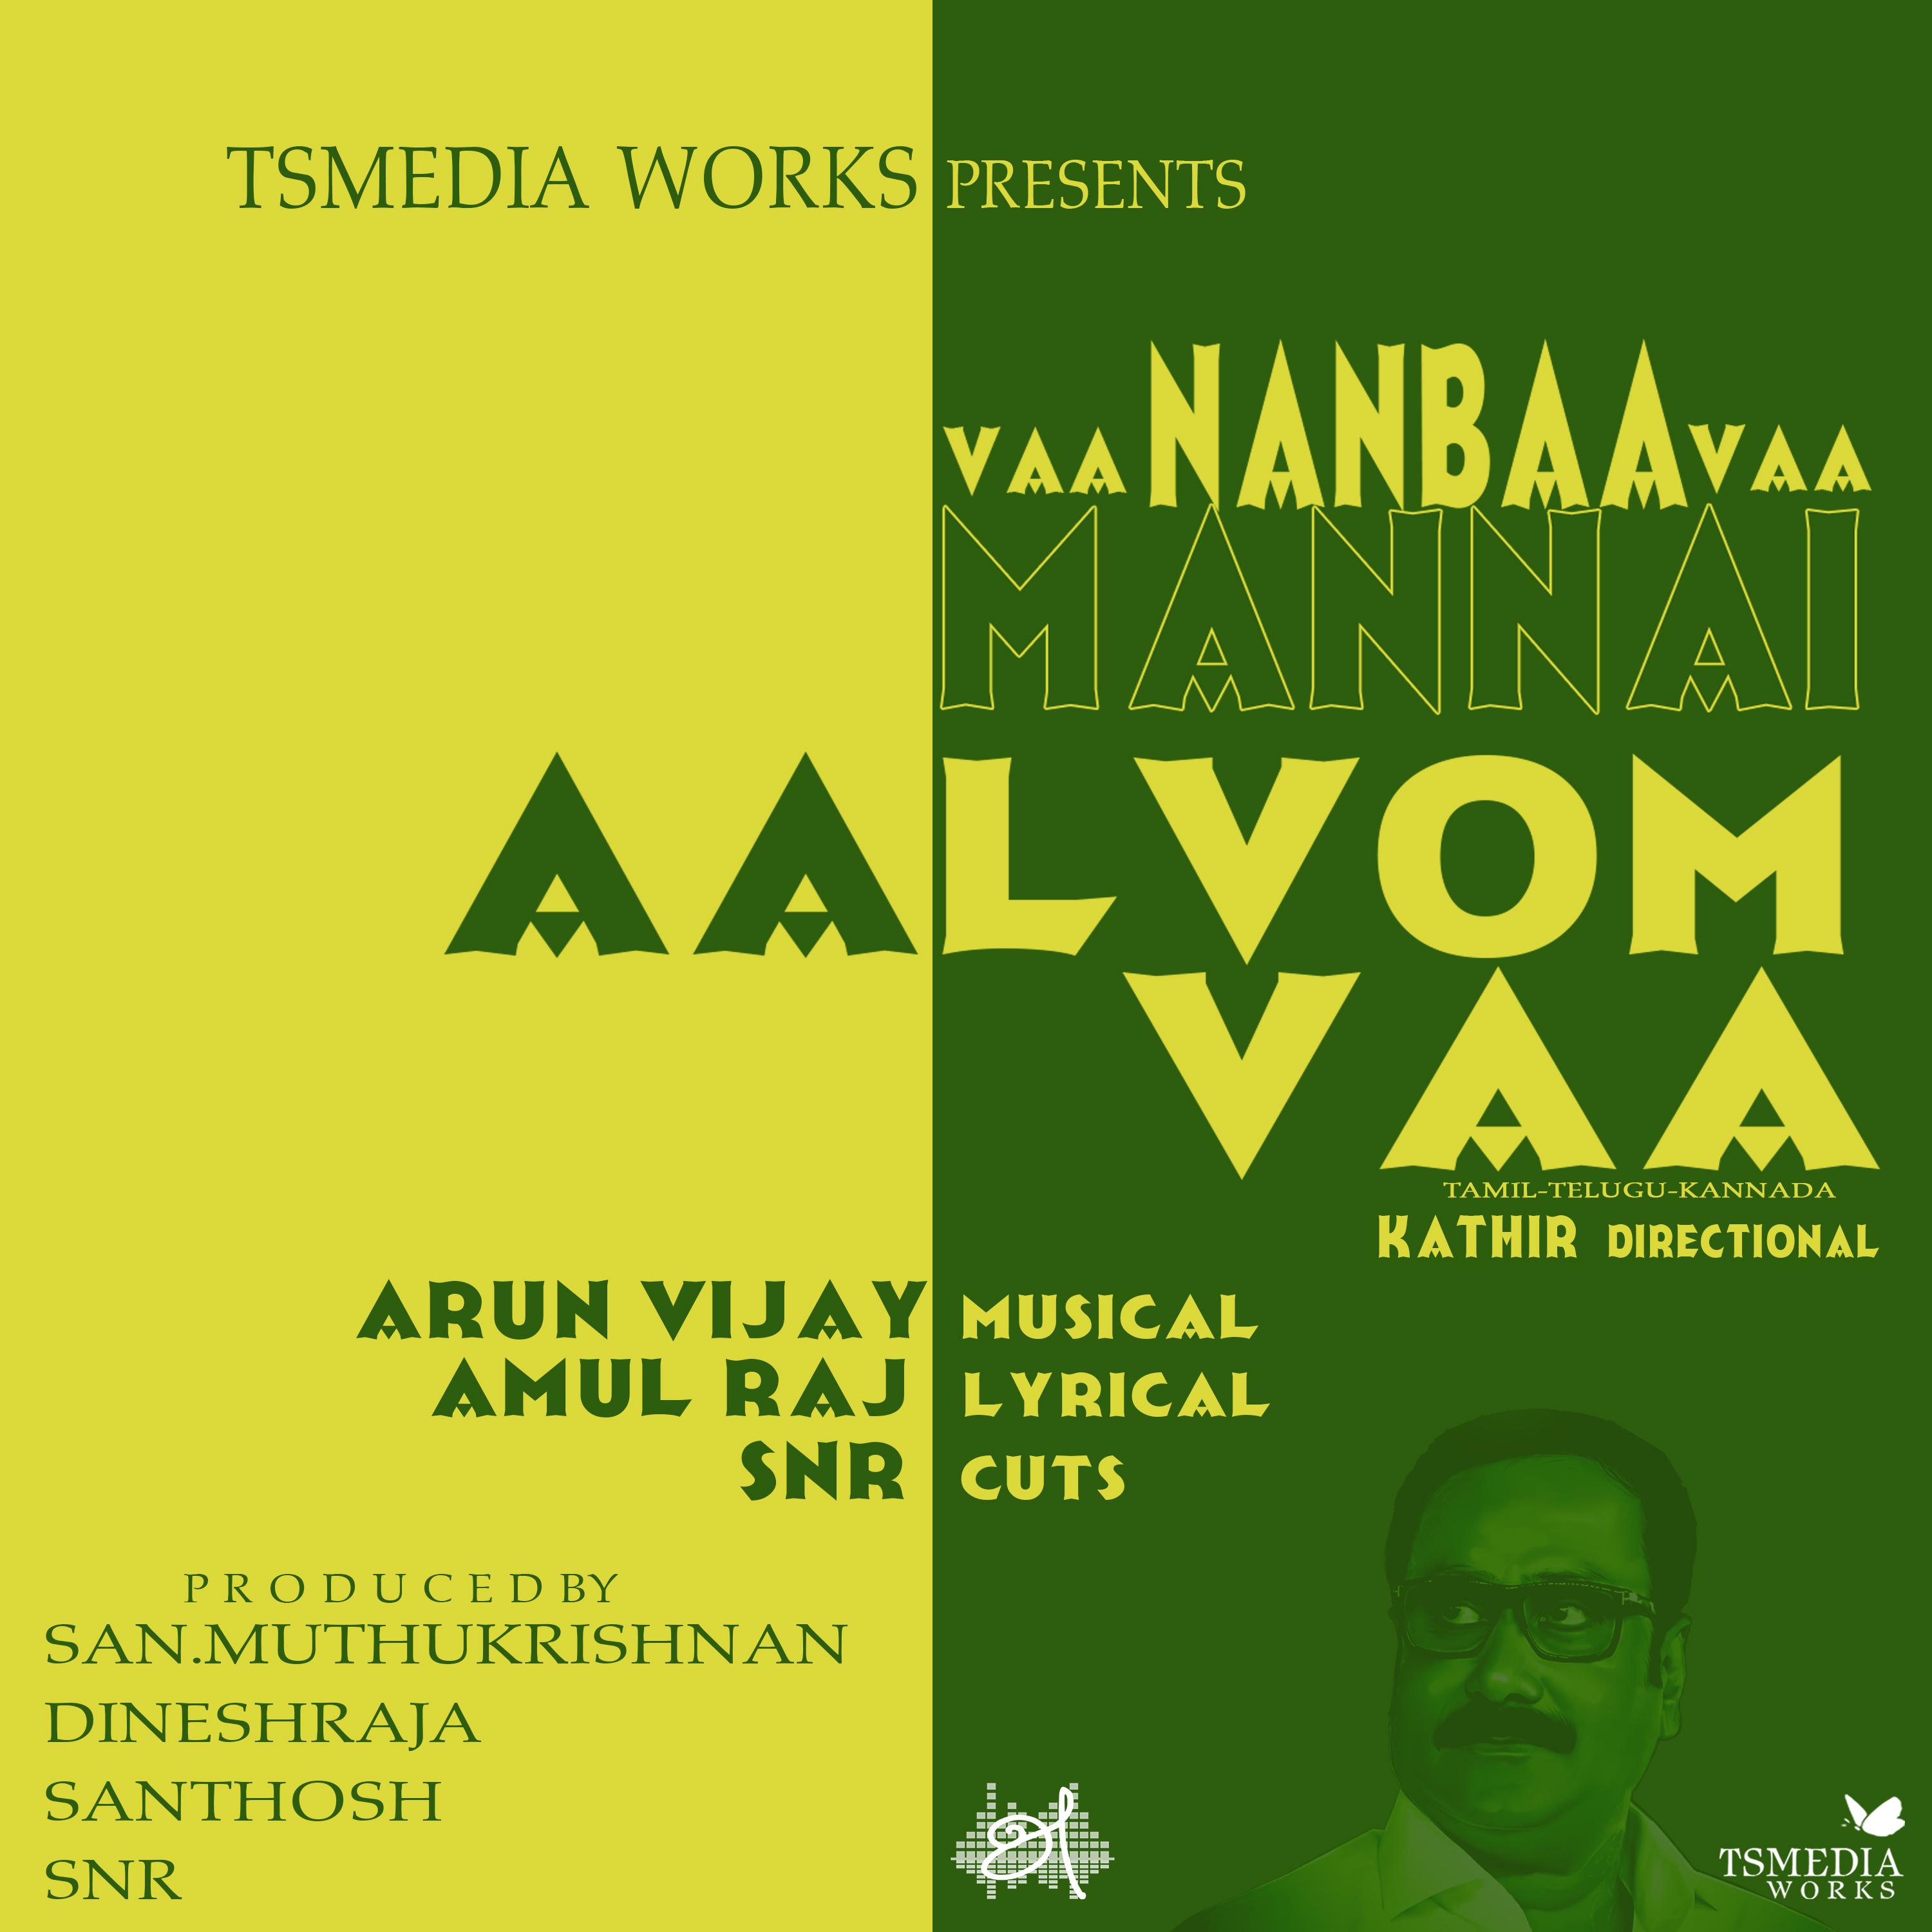 Amulraj - Vaa Nanba Vaa Mannai Aalvom (Promo Theme)